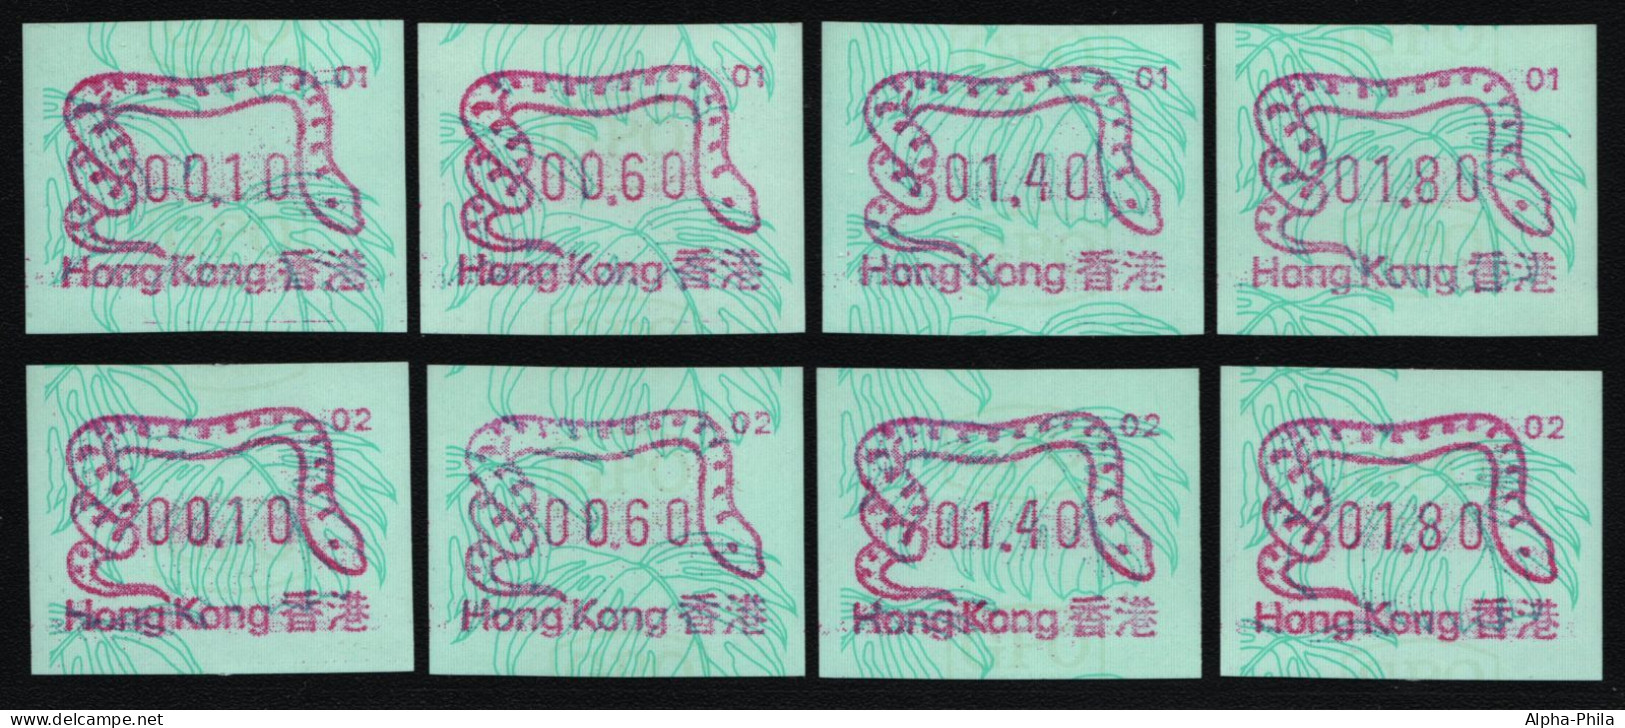 Hongkong 1989 - Mi-Nr. ATM 4 ** - MNH - Automat 01 & 02 - Je 4 Wertstufen - Distributors